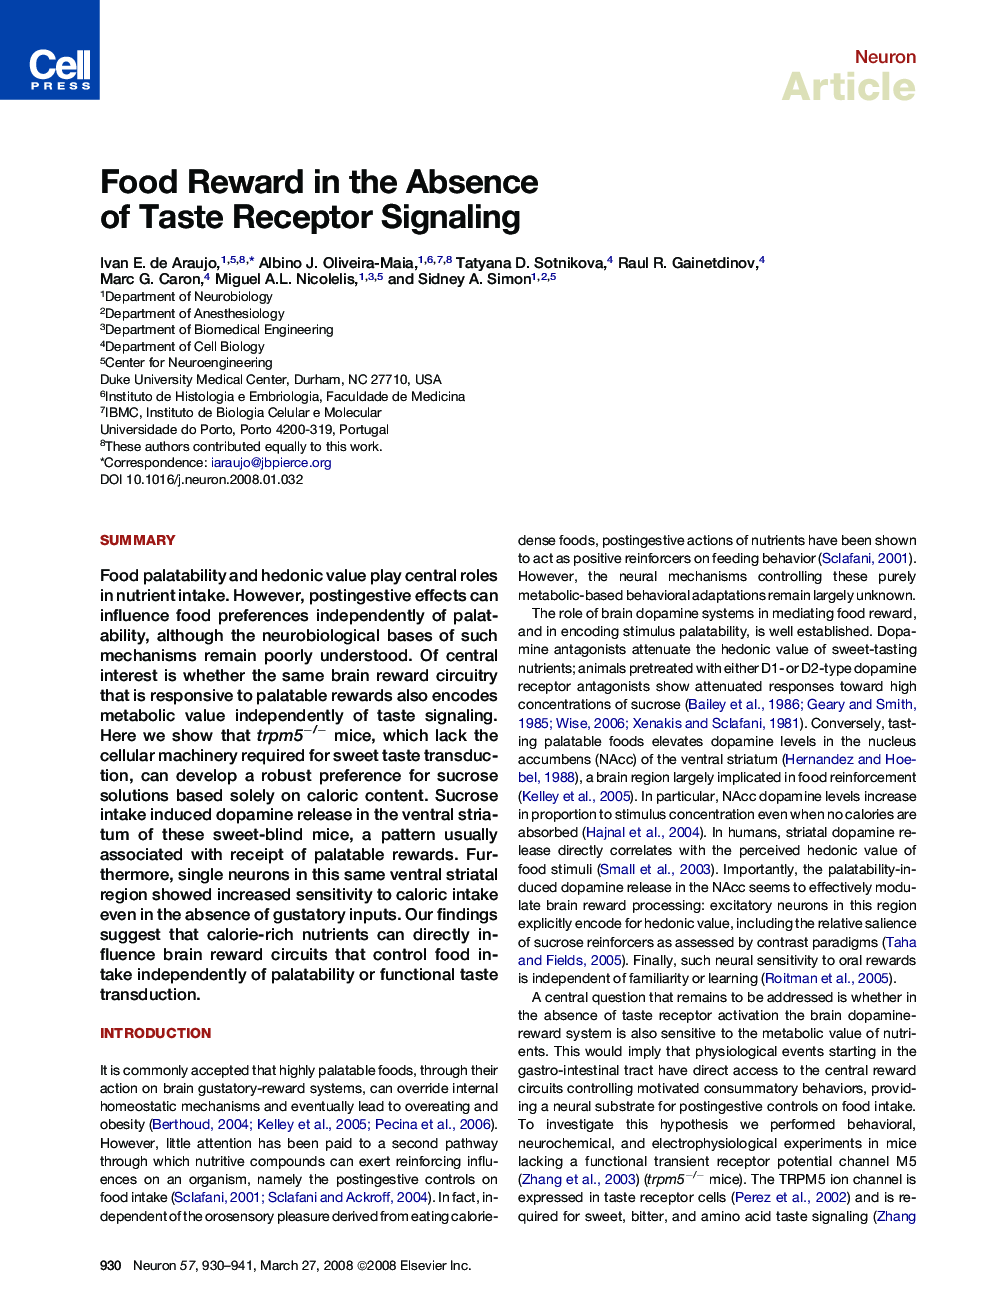 Food Reward in the Absence of Taste Receptor Signaling